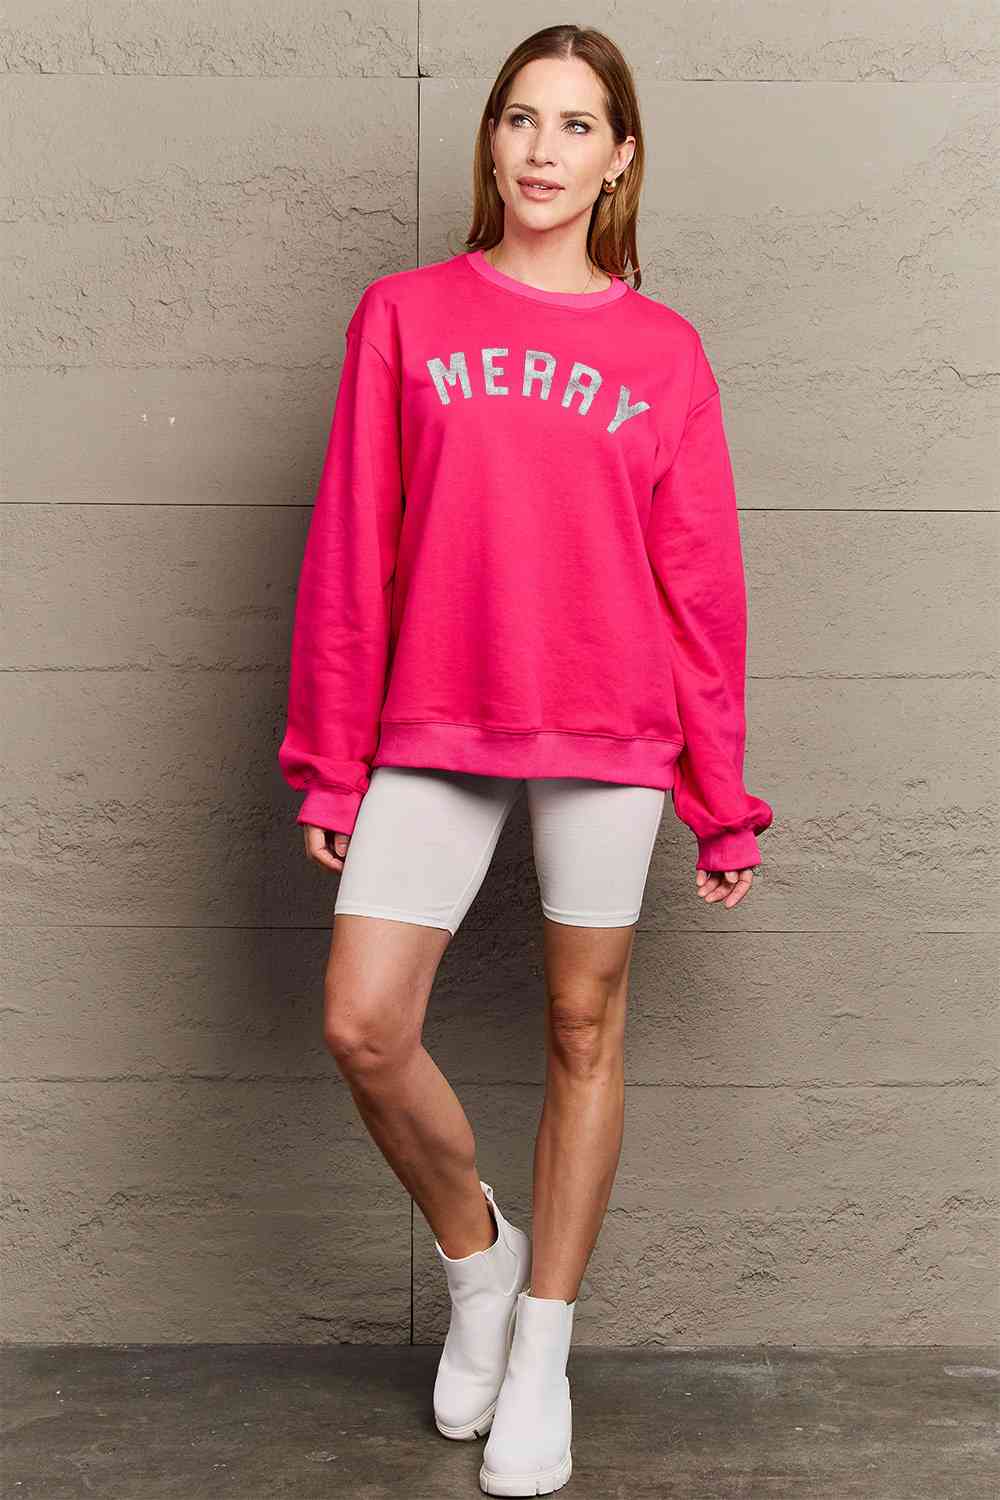 Simply Love Full Size MERRY Graphic Sweatshirt